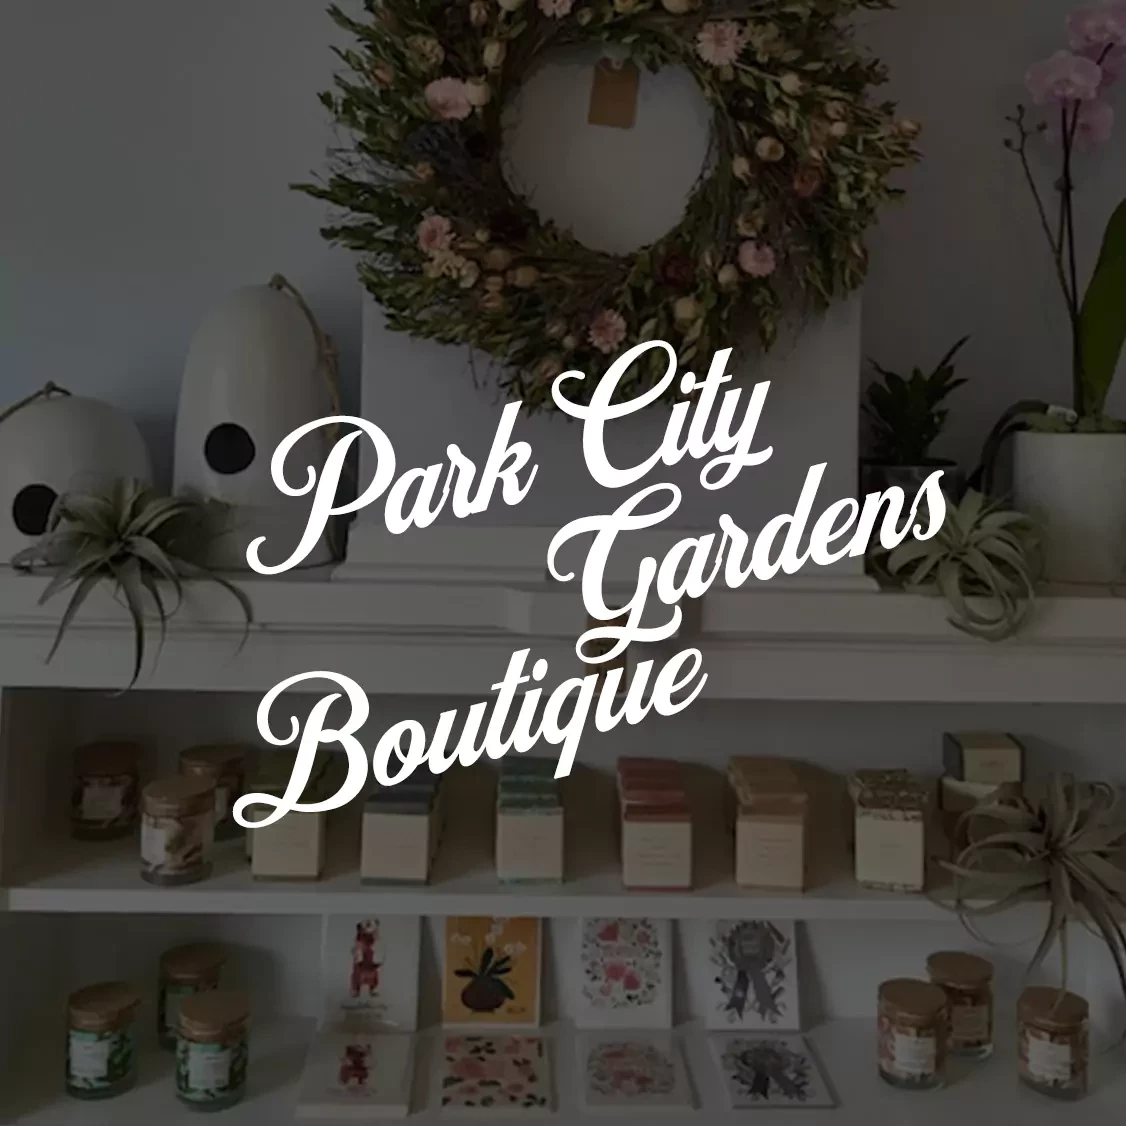 SMMT Retailer | Park City Gardens Boutique